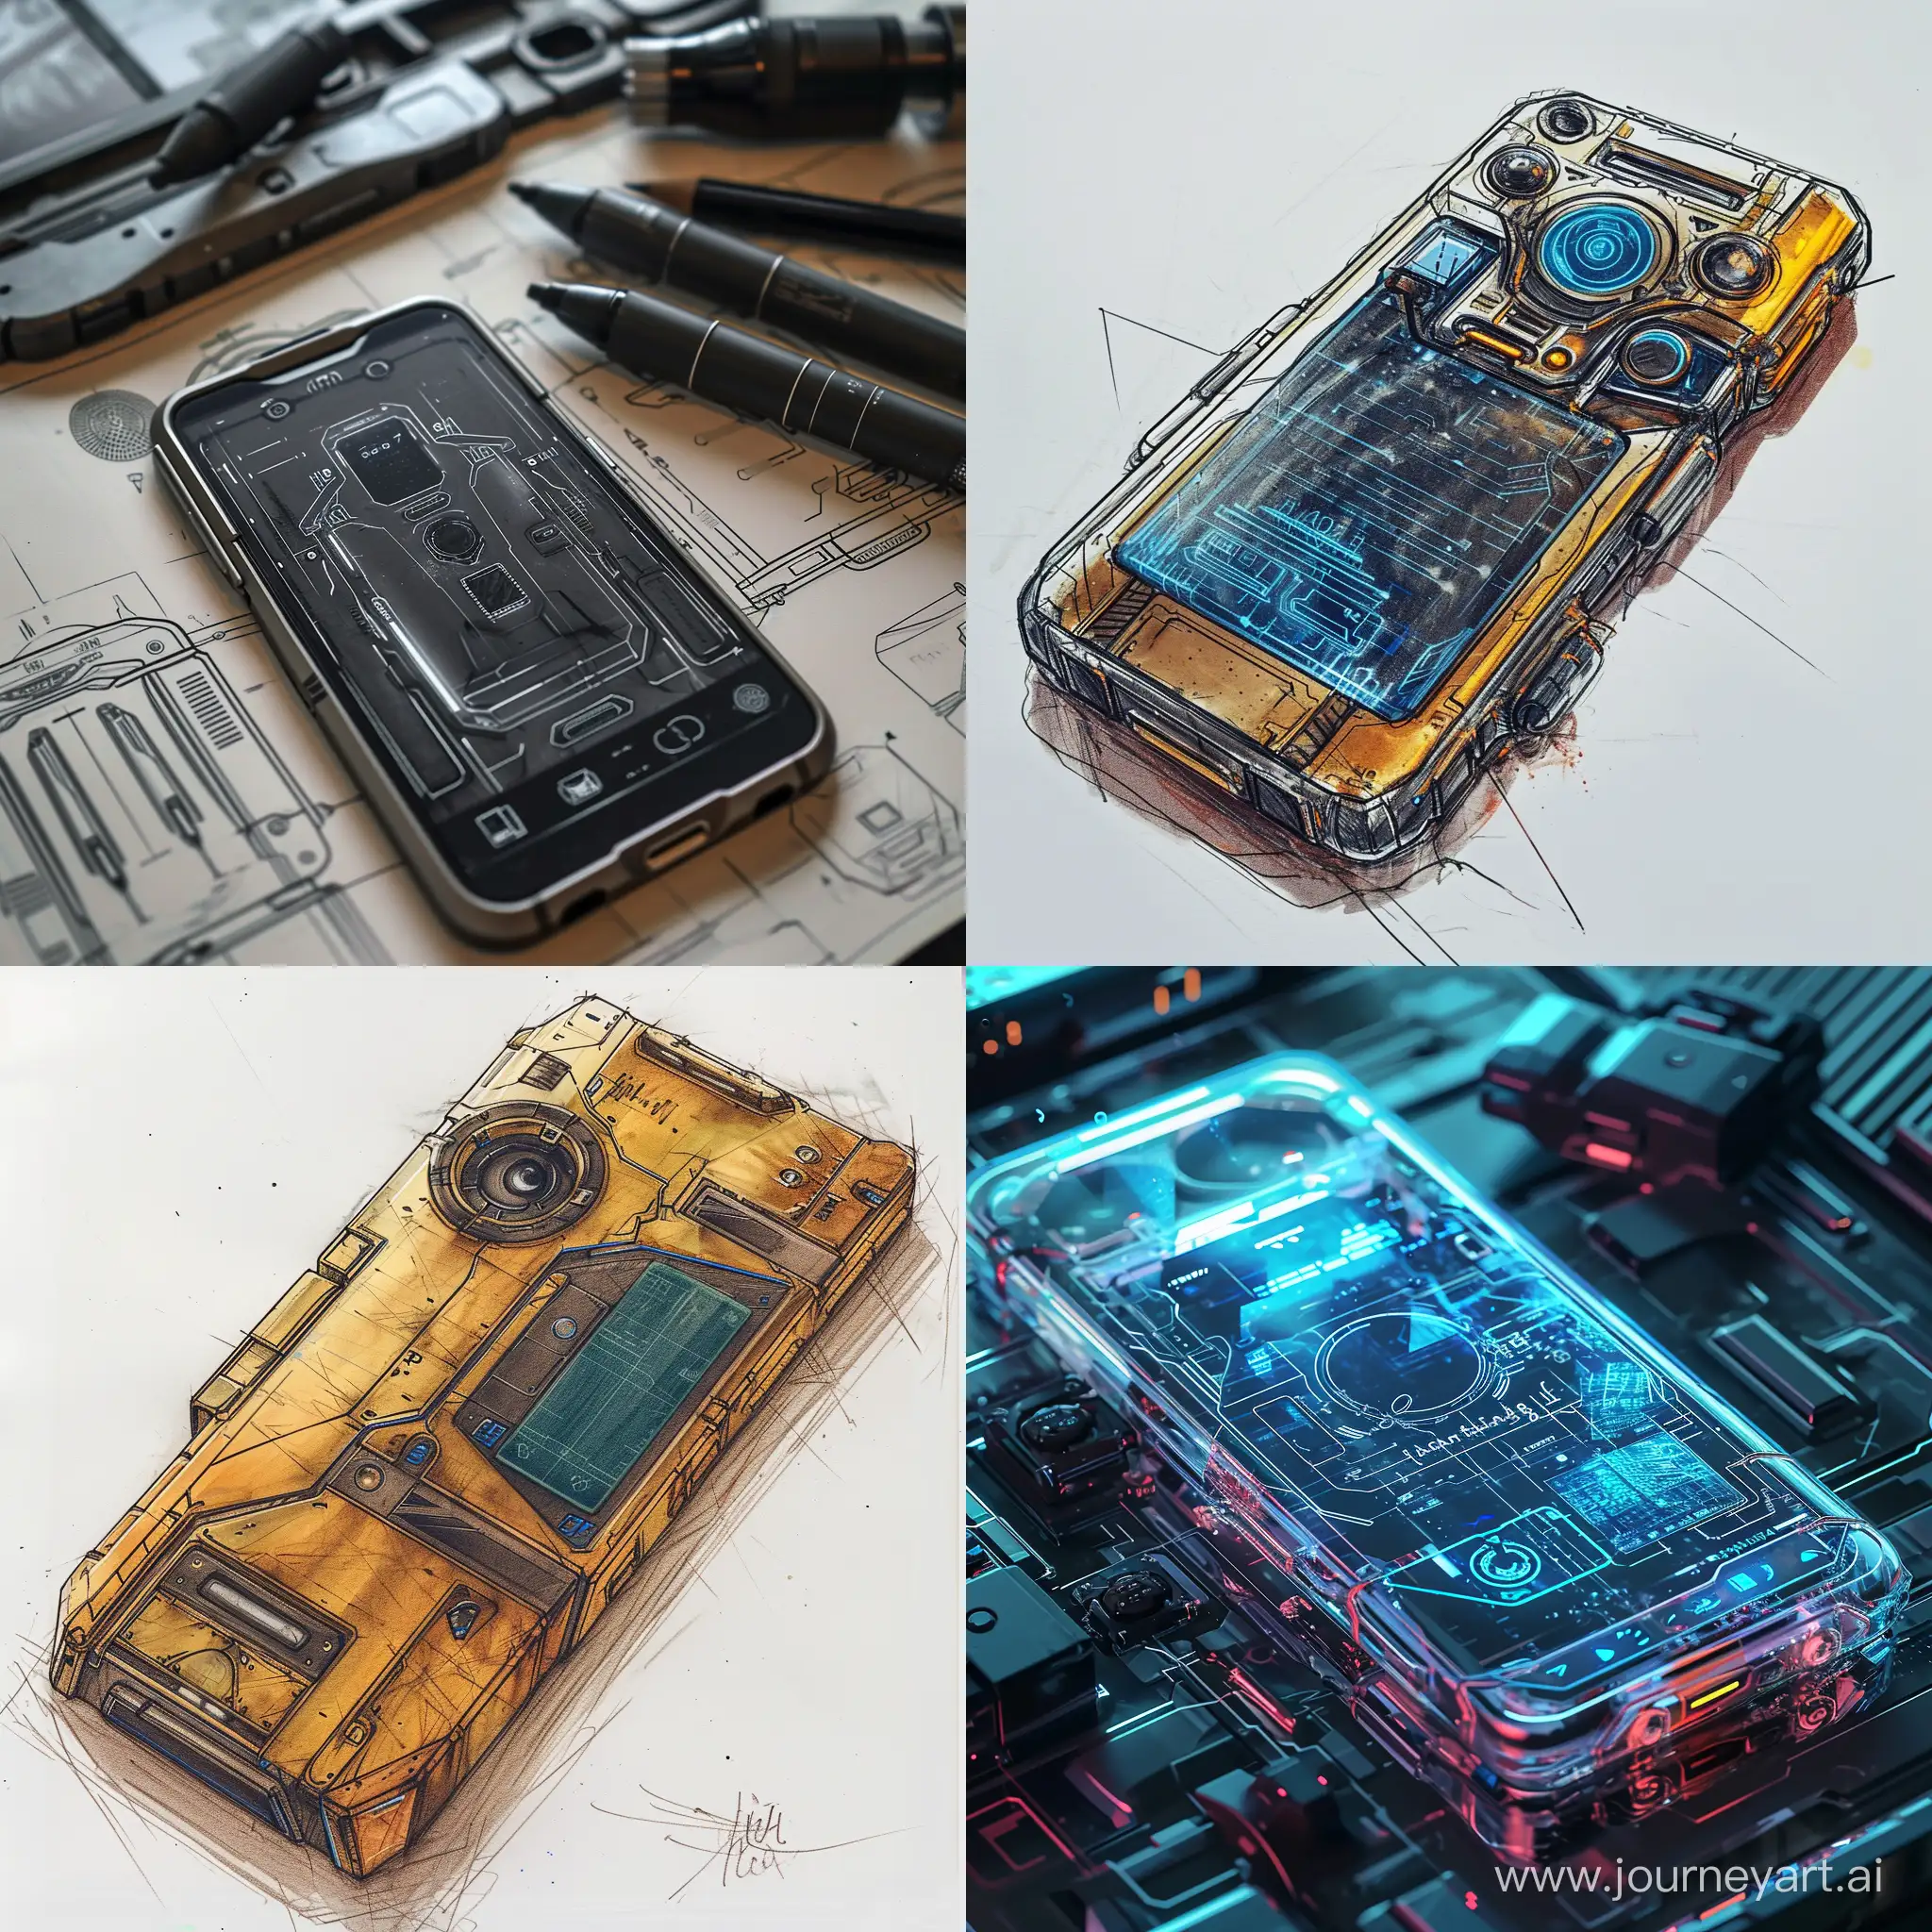 Postcyberpunk-Futuristic-Smartphone-Concept-Art